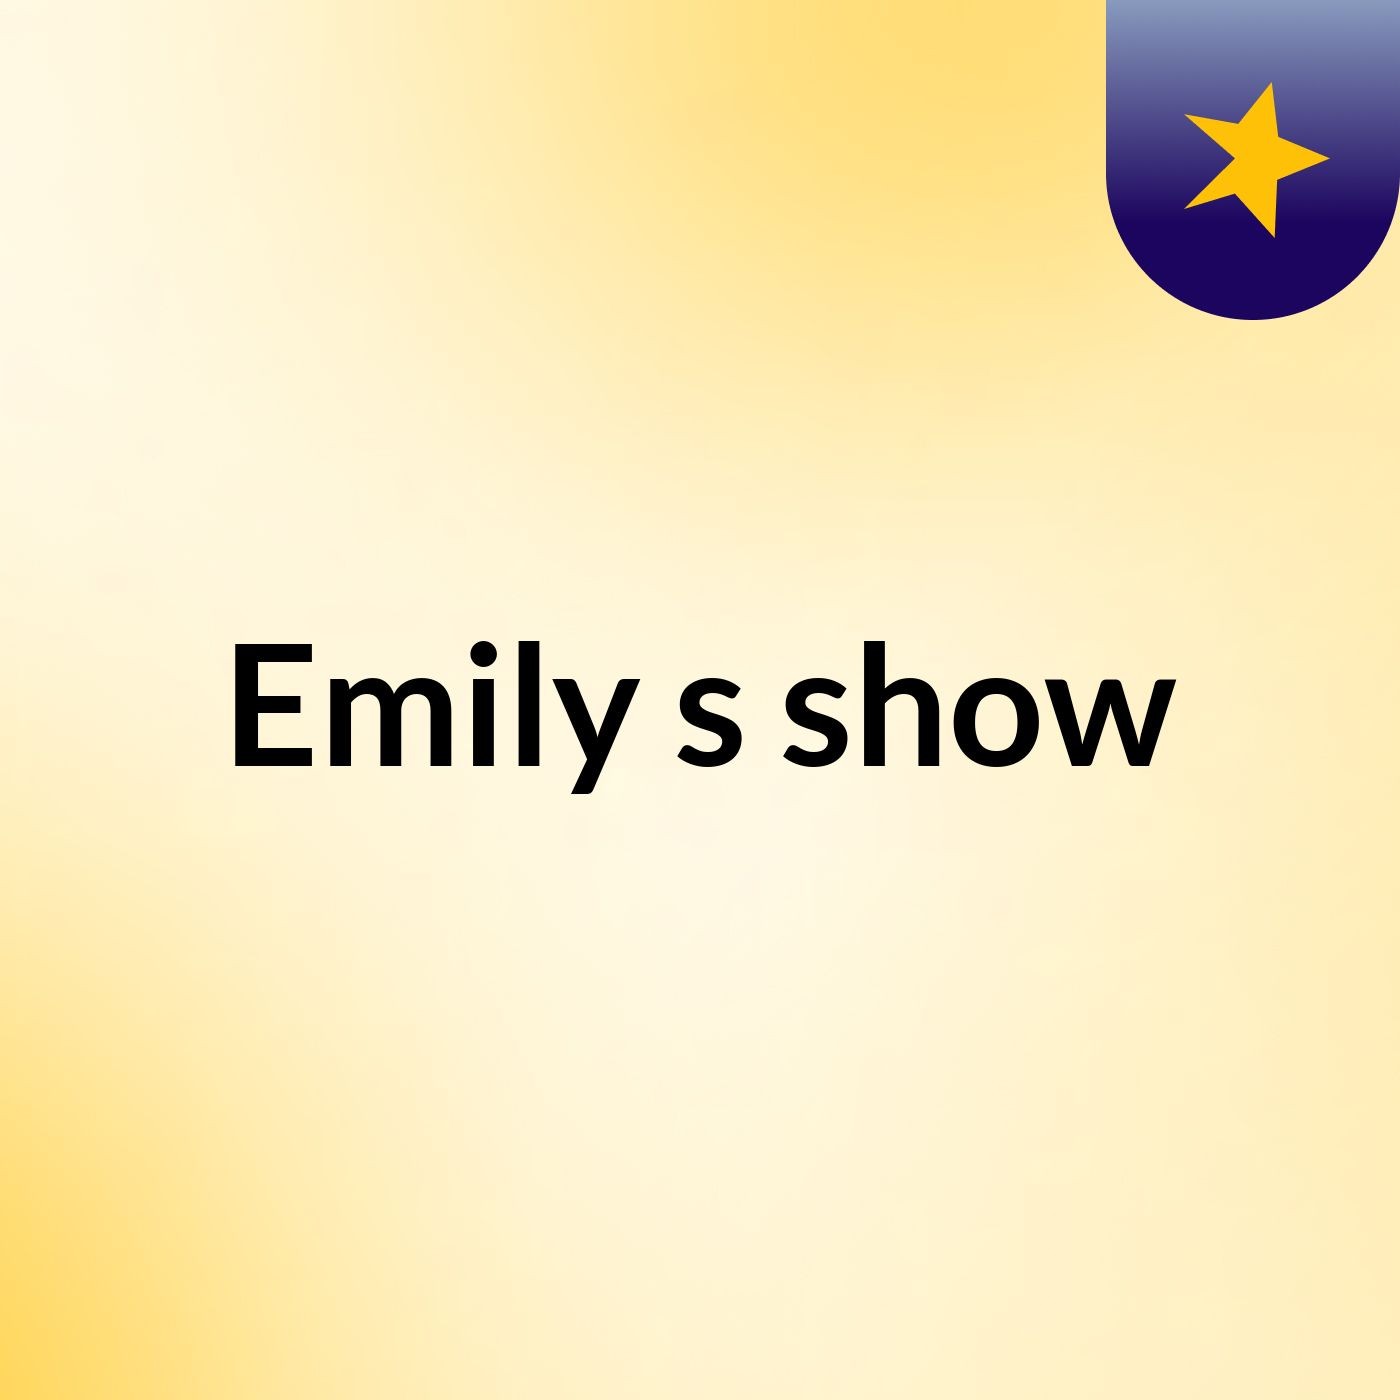 Emily's show